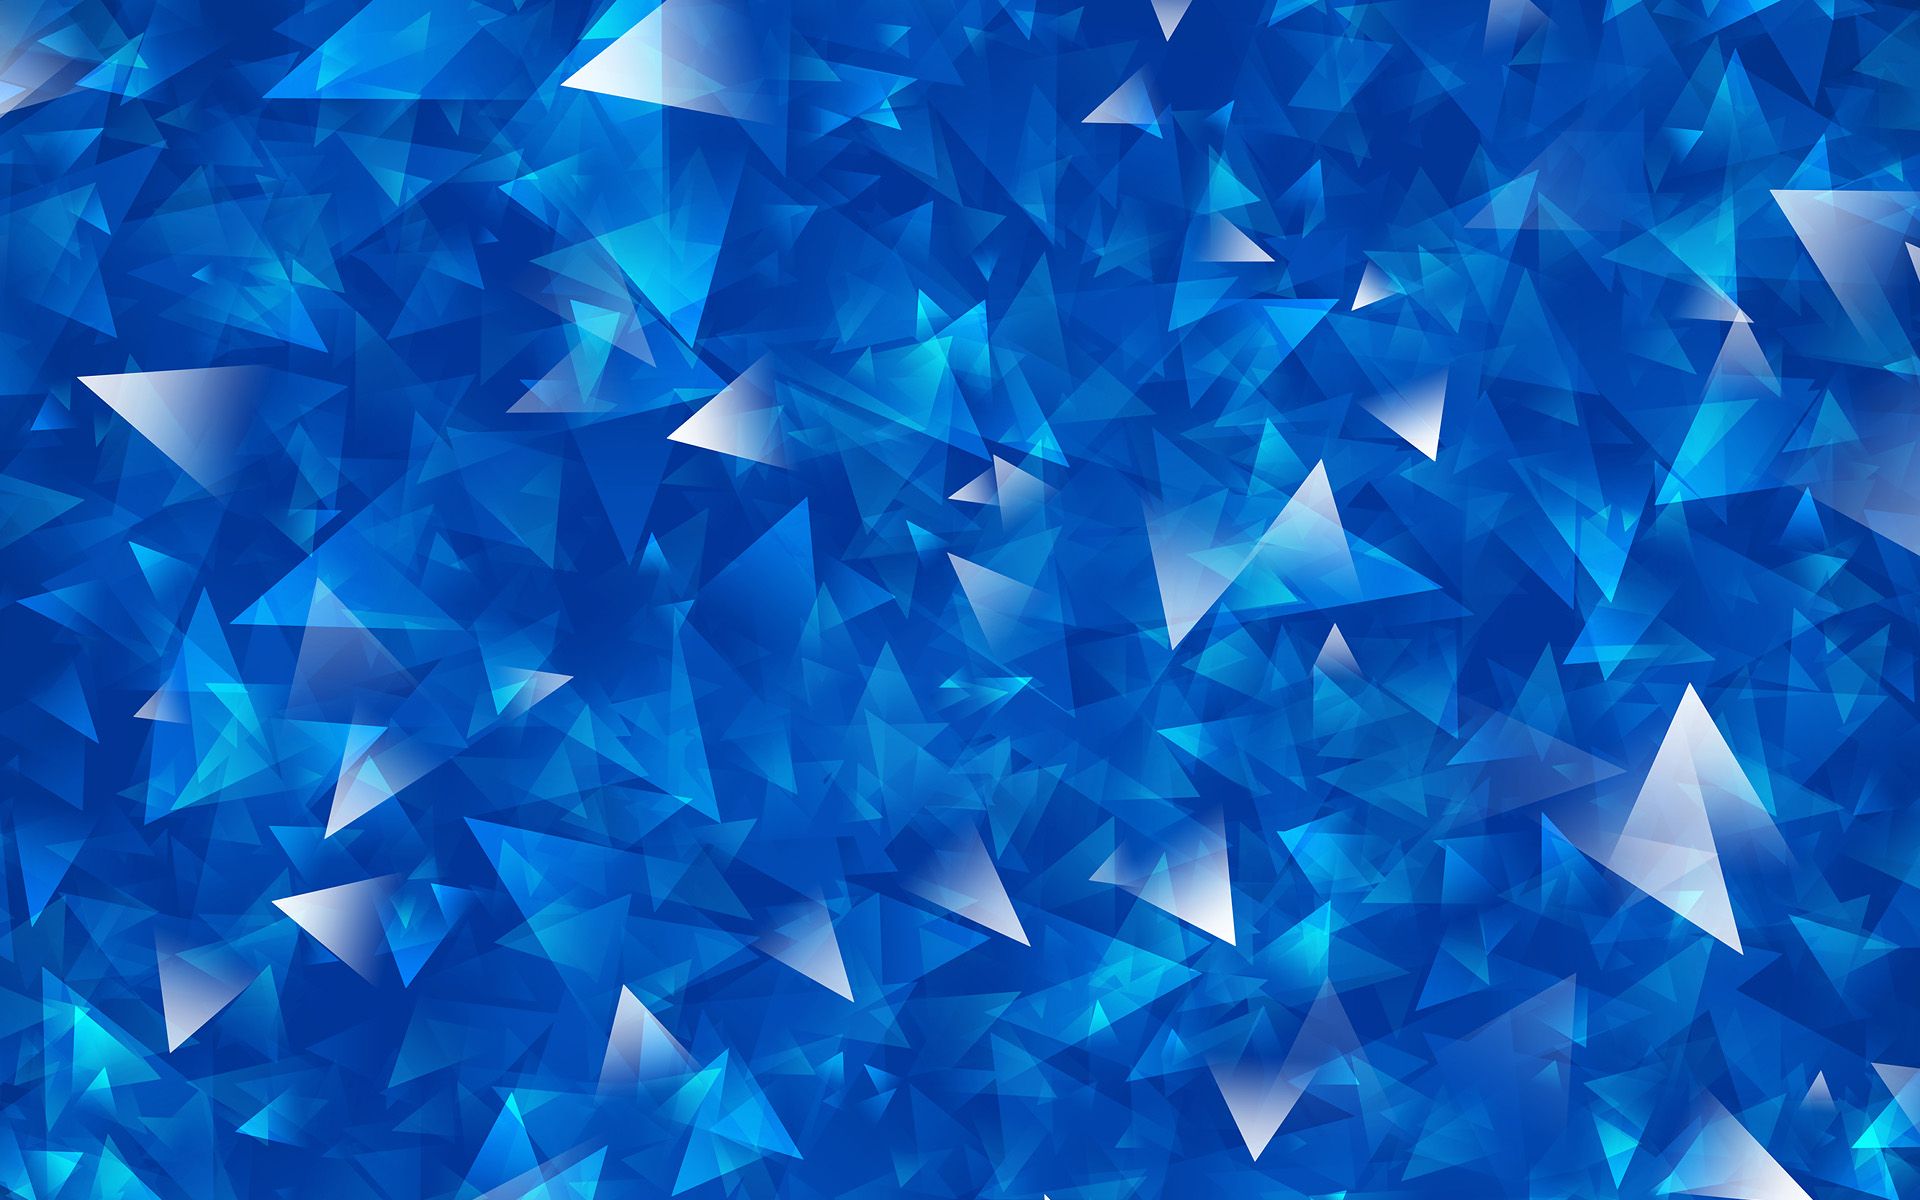 1920 x 1200 Wallpaper, Pt. 5. Blue geometric wallpaper, Blue background wallpaper, Cool blue wallpaper